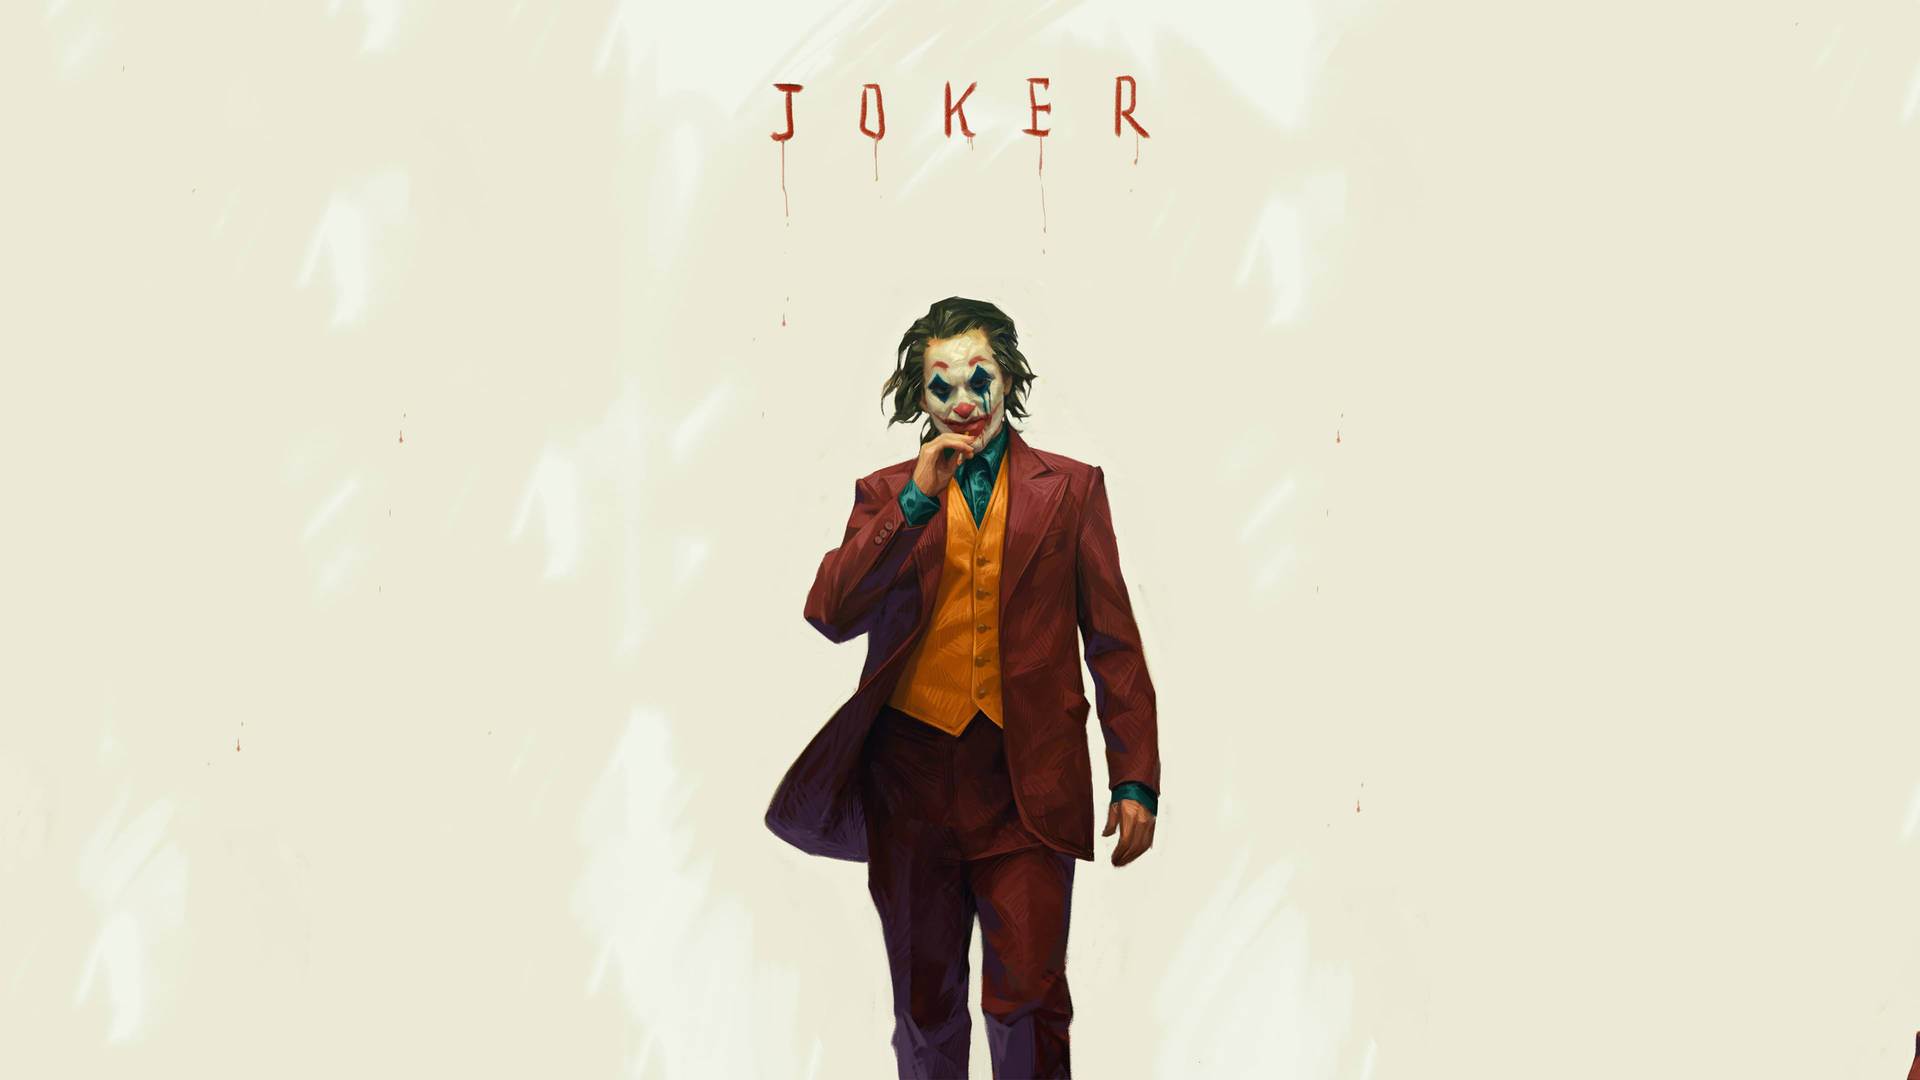 Joker 5120X2880 Wallpaper and Background Image